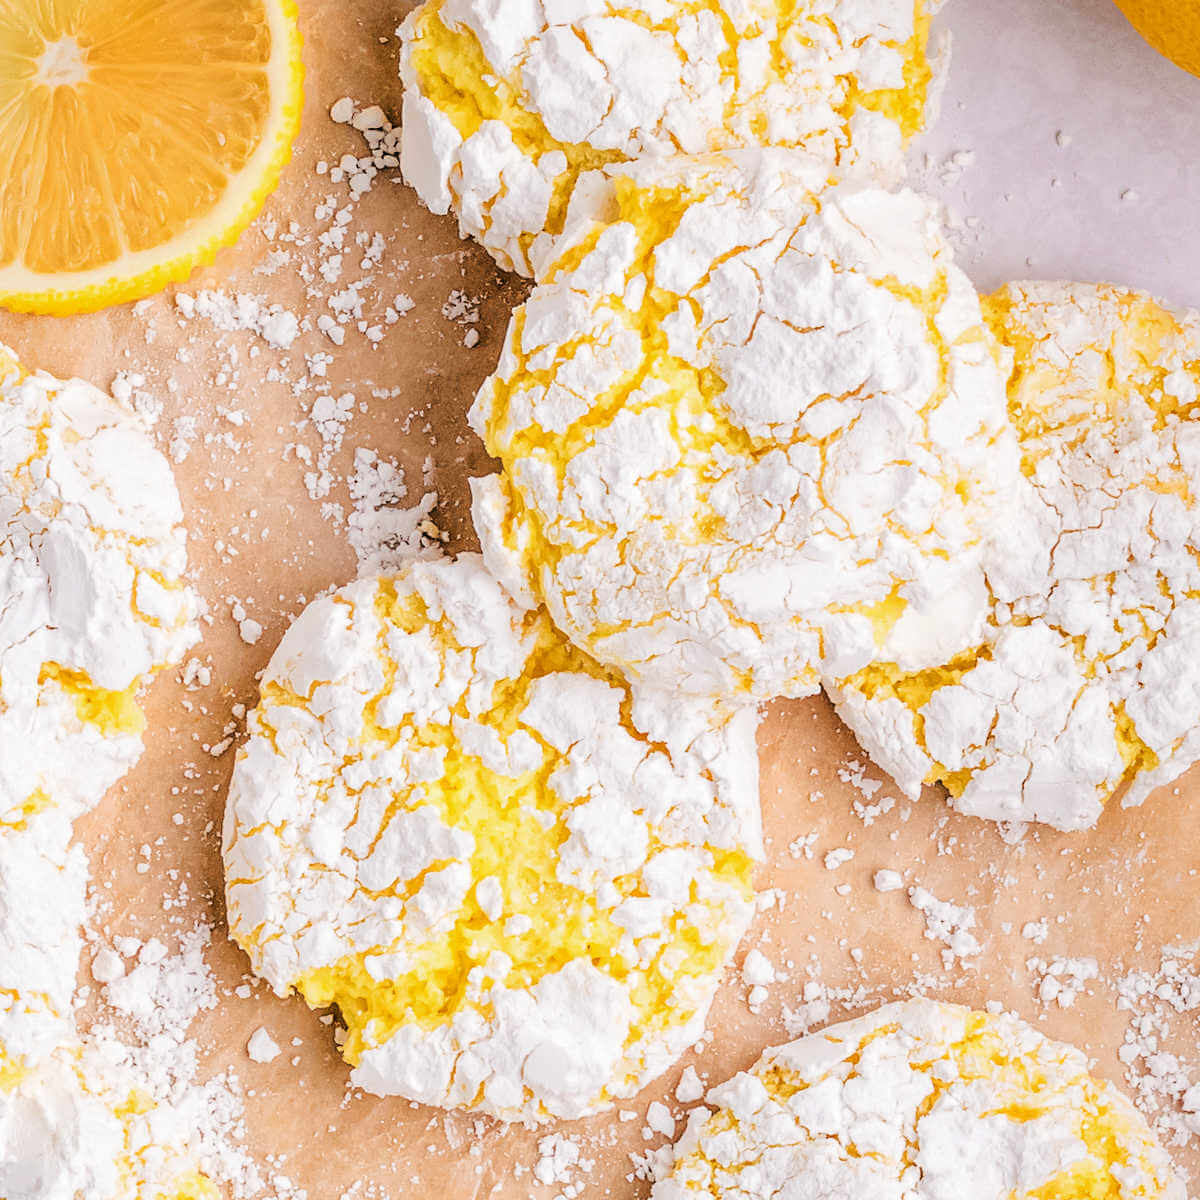 Lemon Crinkle Cookies on a table with lemon slices.